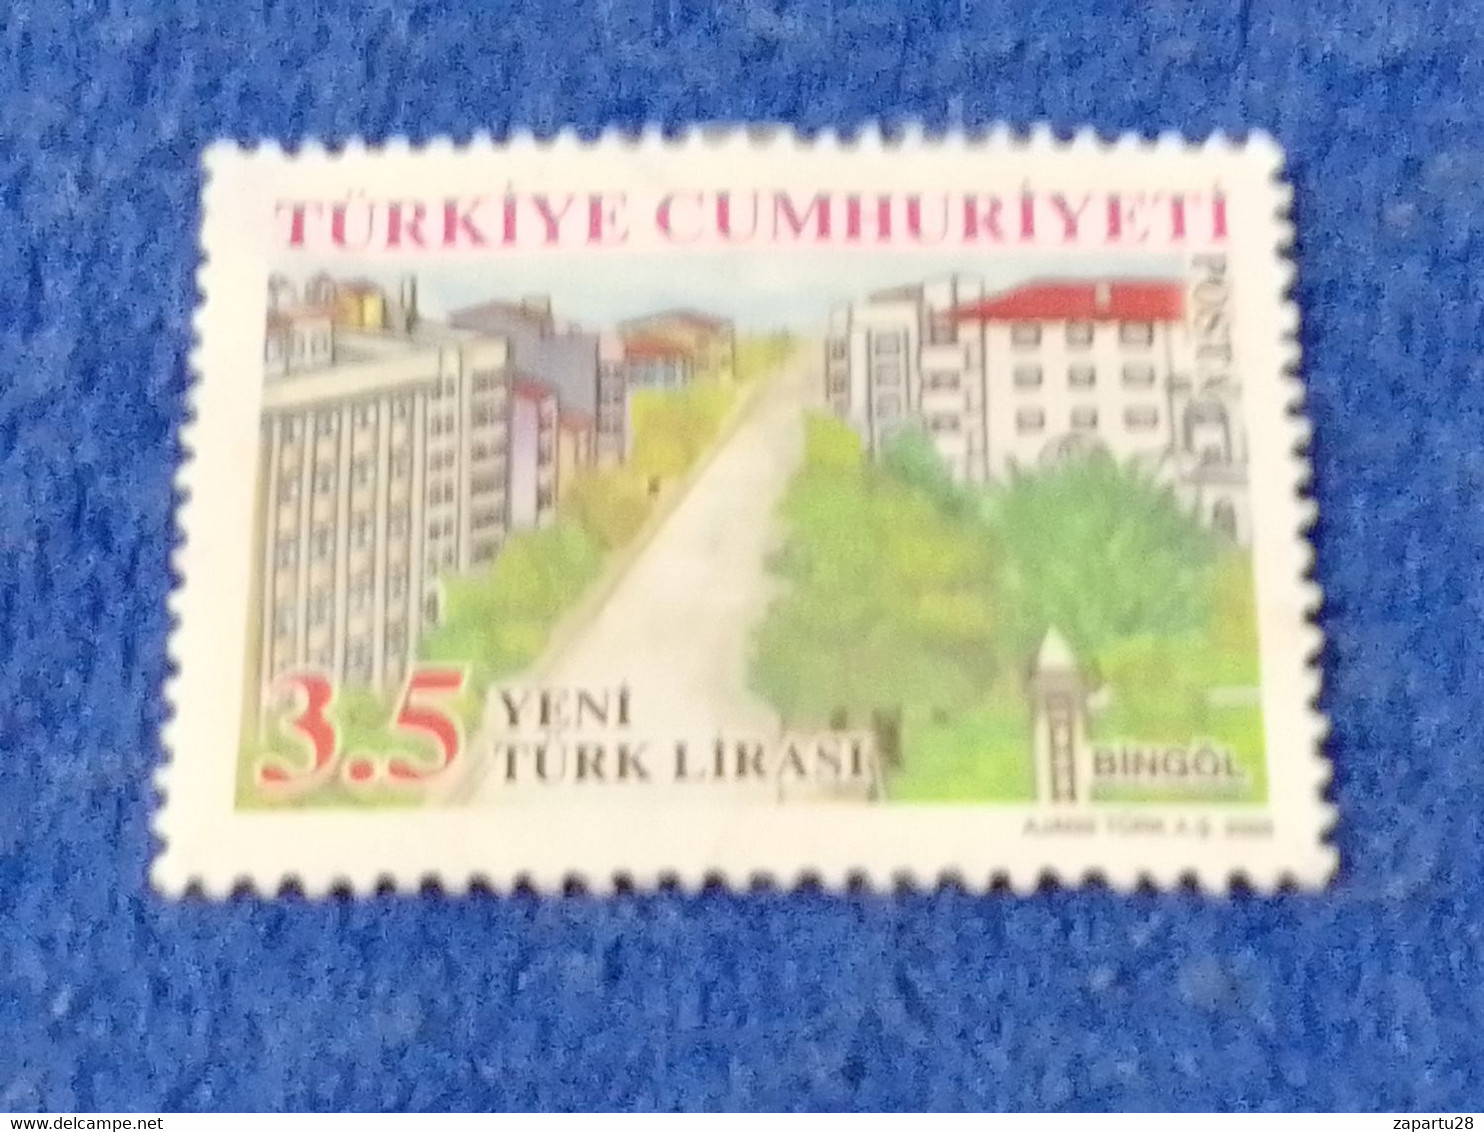 TÜRKEY--2000- 10  - 3.50TL      DAMGALI - Used Stamps